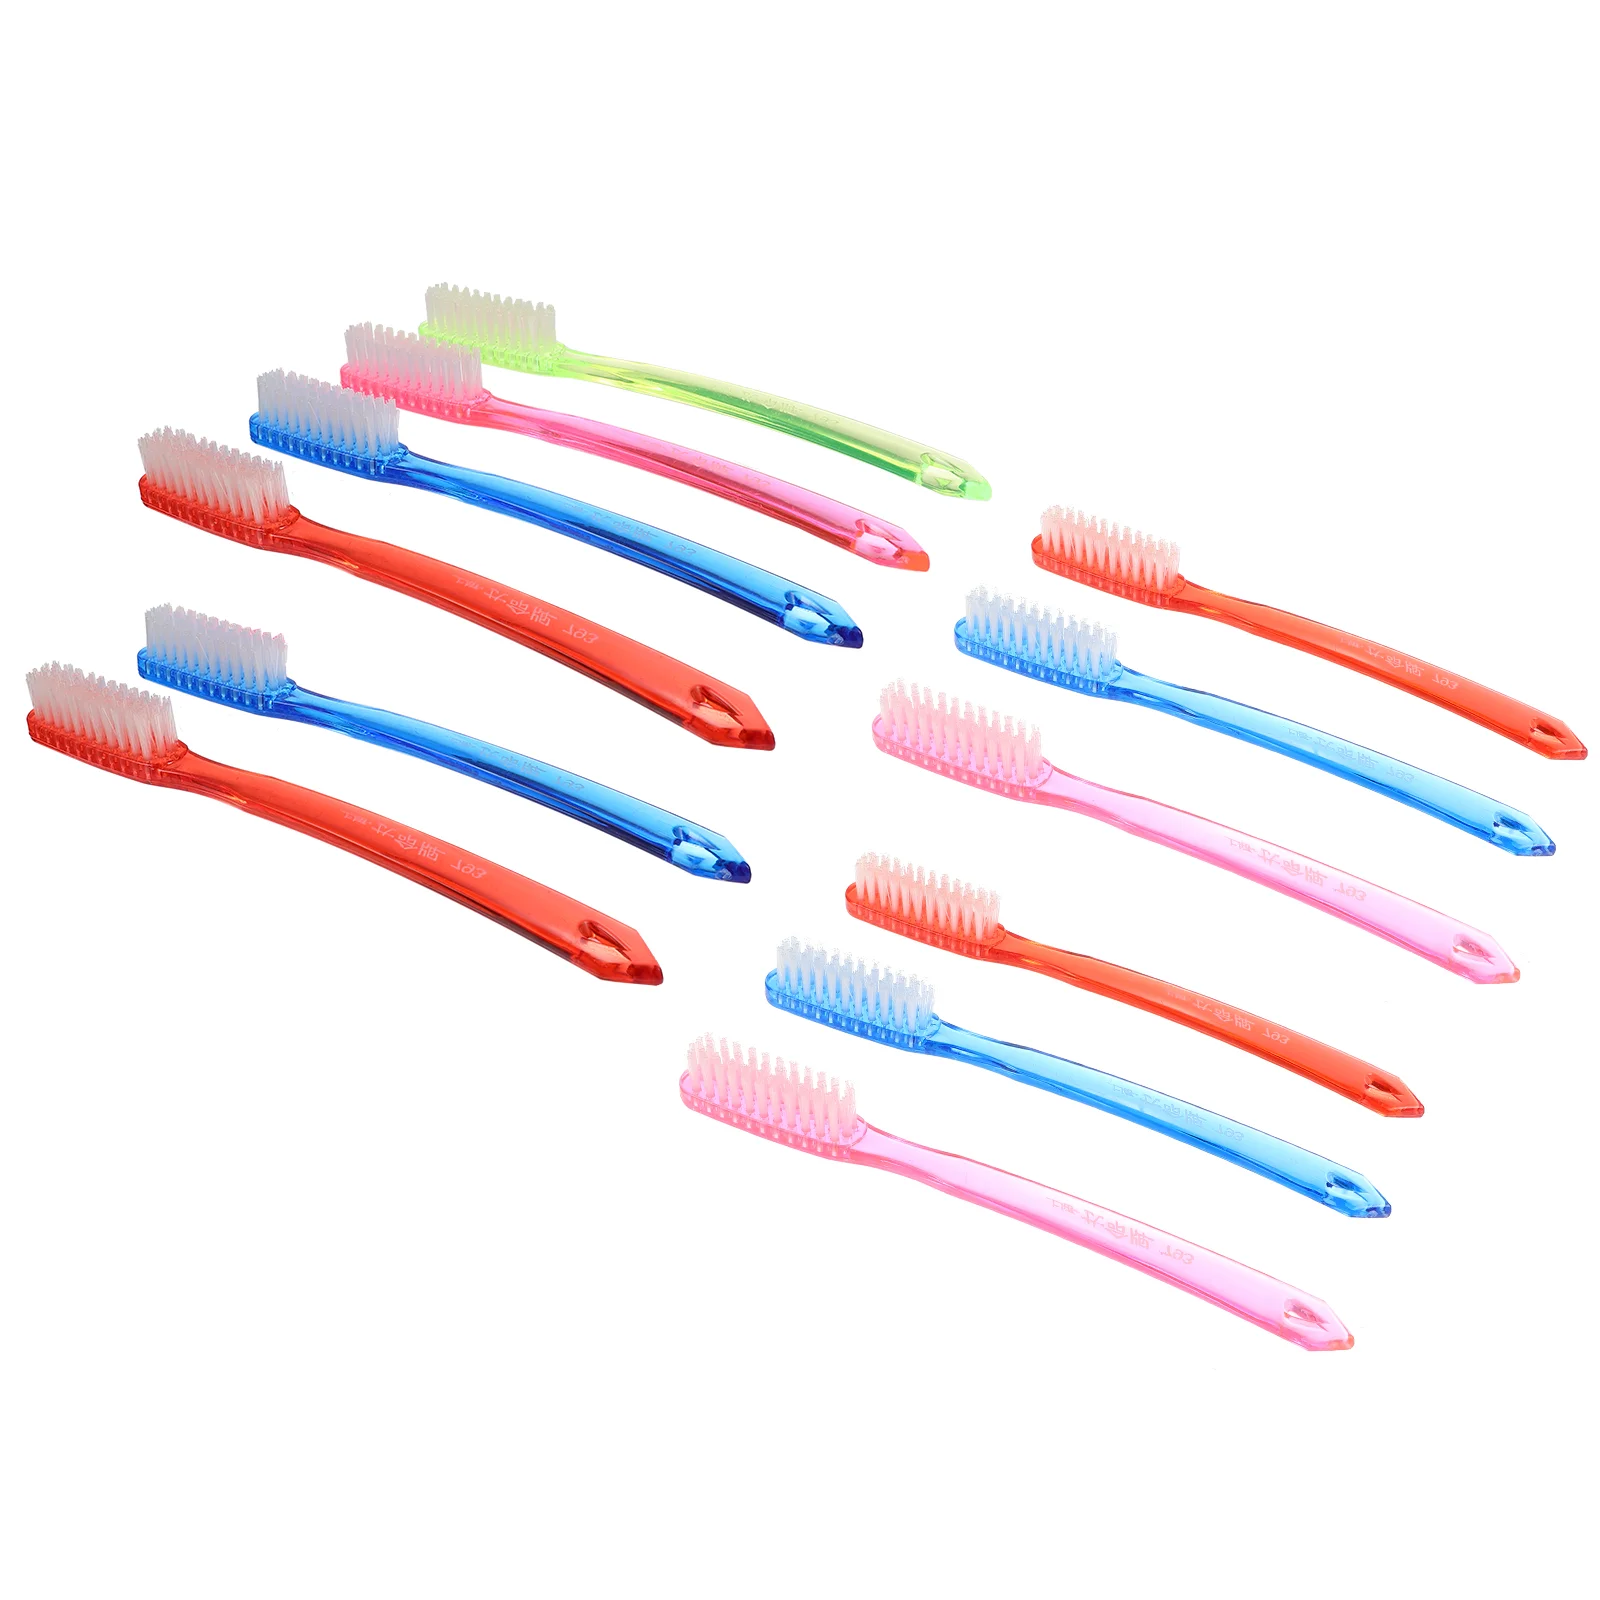 

Hard Toothbrushes Denture Teens Brush Care Cleaning Teeth Kids Brushes Clean Bursh Firm Head Travel Interdental Stiff Manual